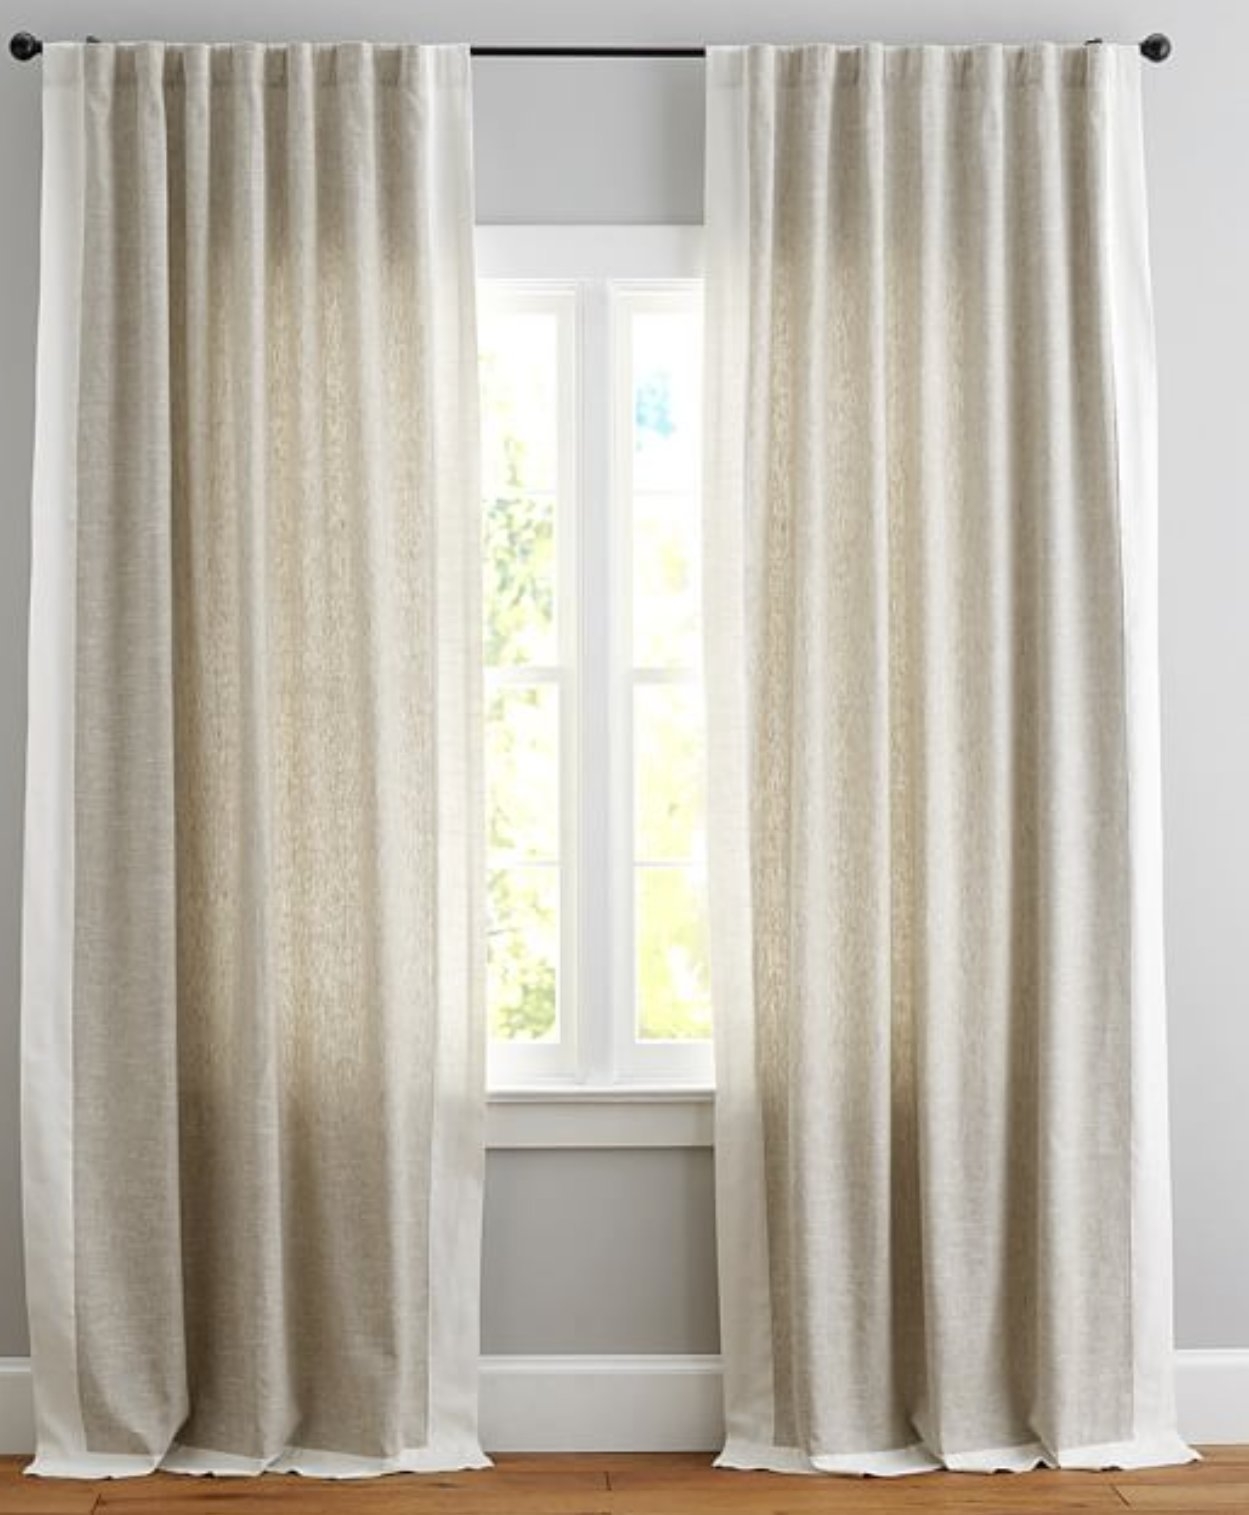 Emery Border Linen/Cotton Rod Pocket Curtain, 50 x 108", Oatmeal/Ivory - Image 0